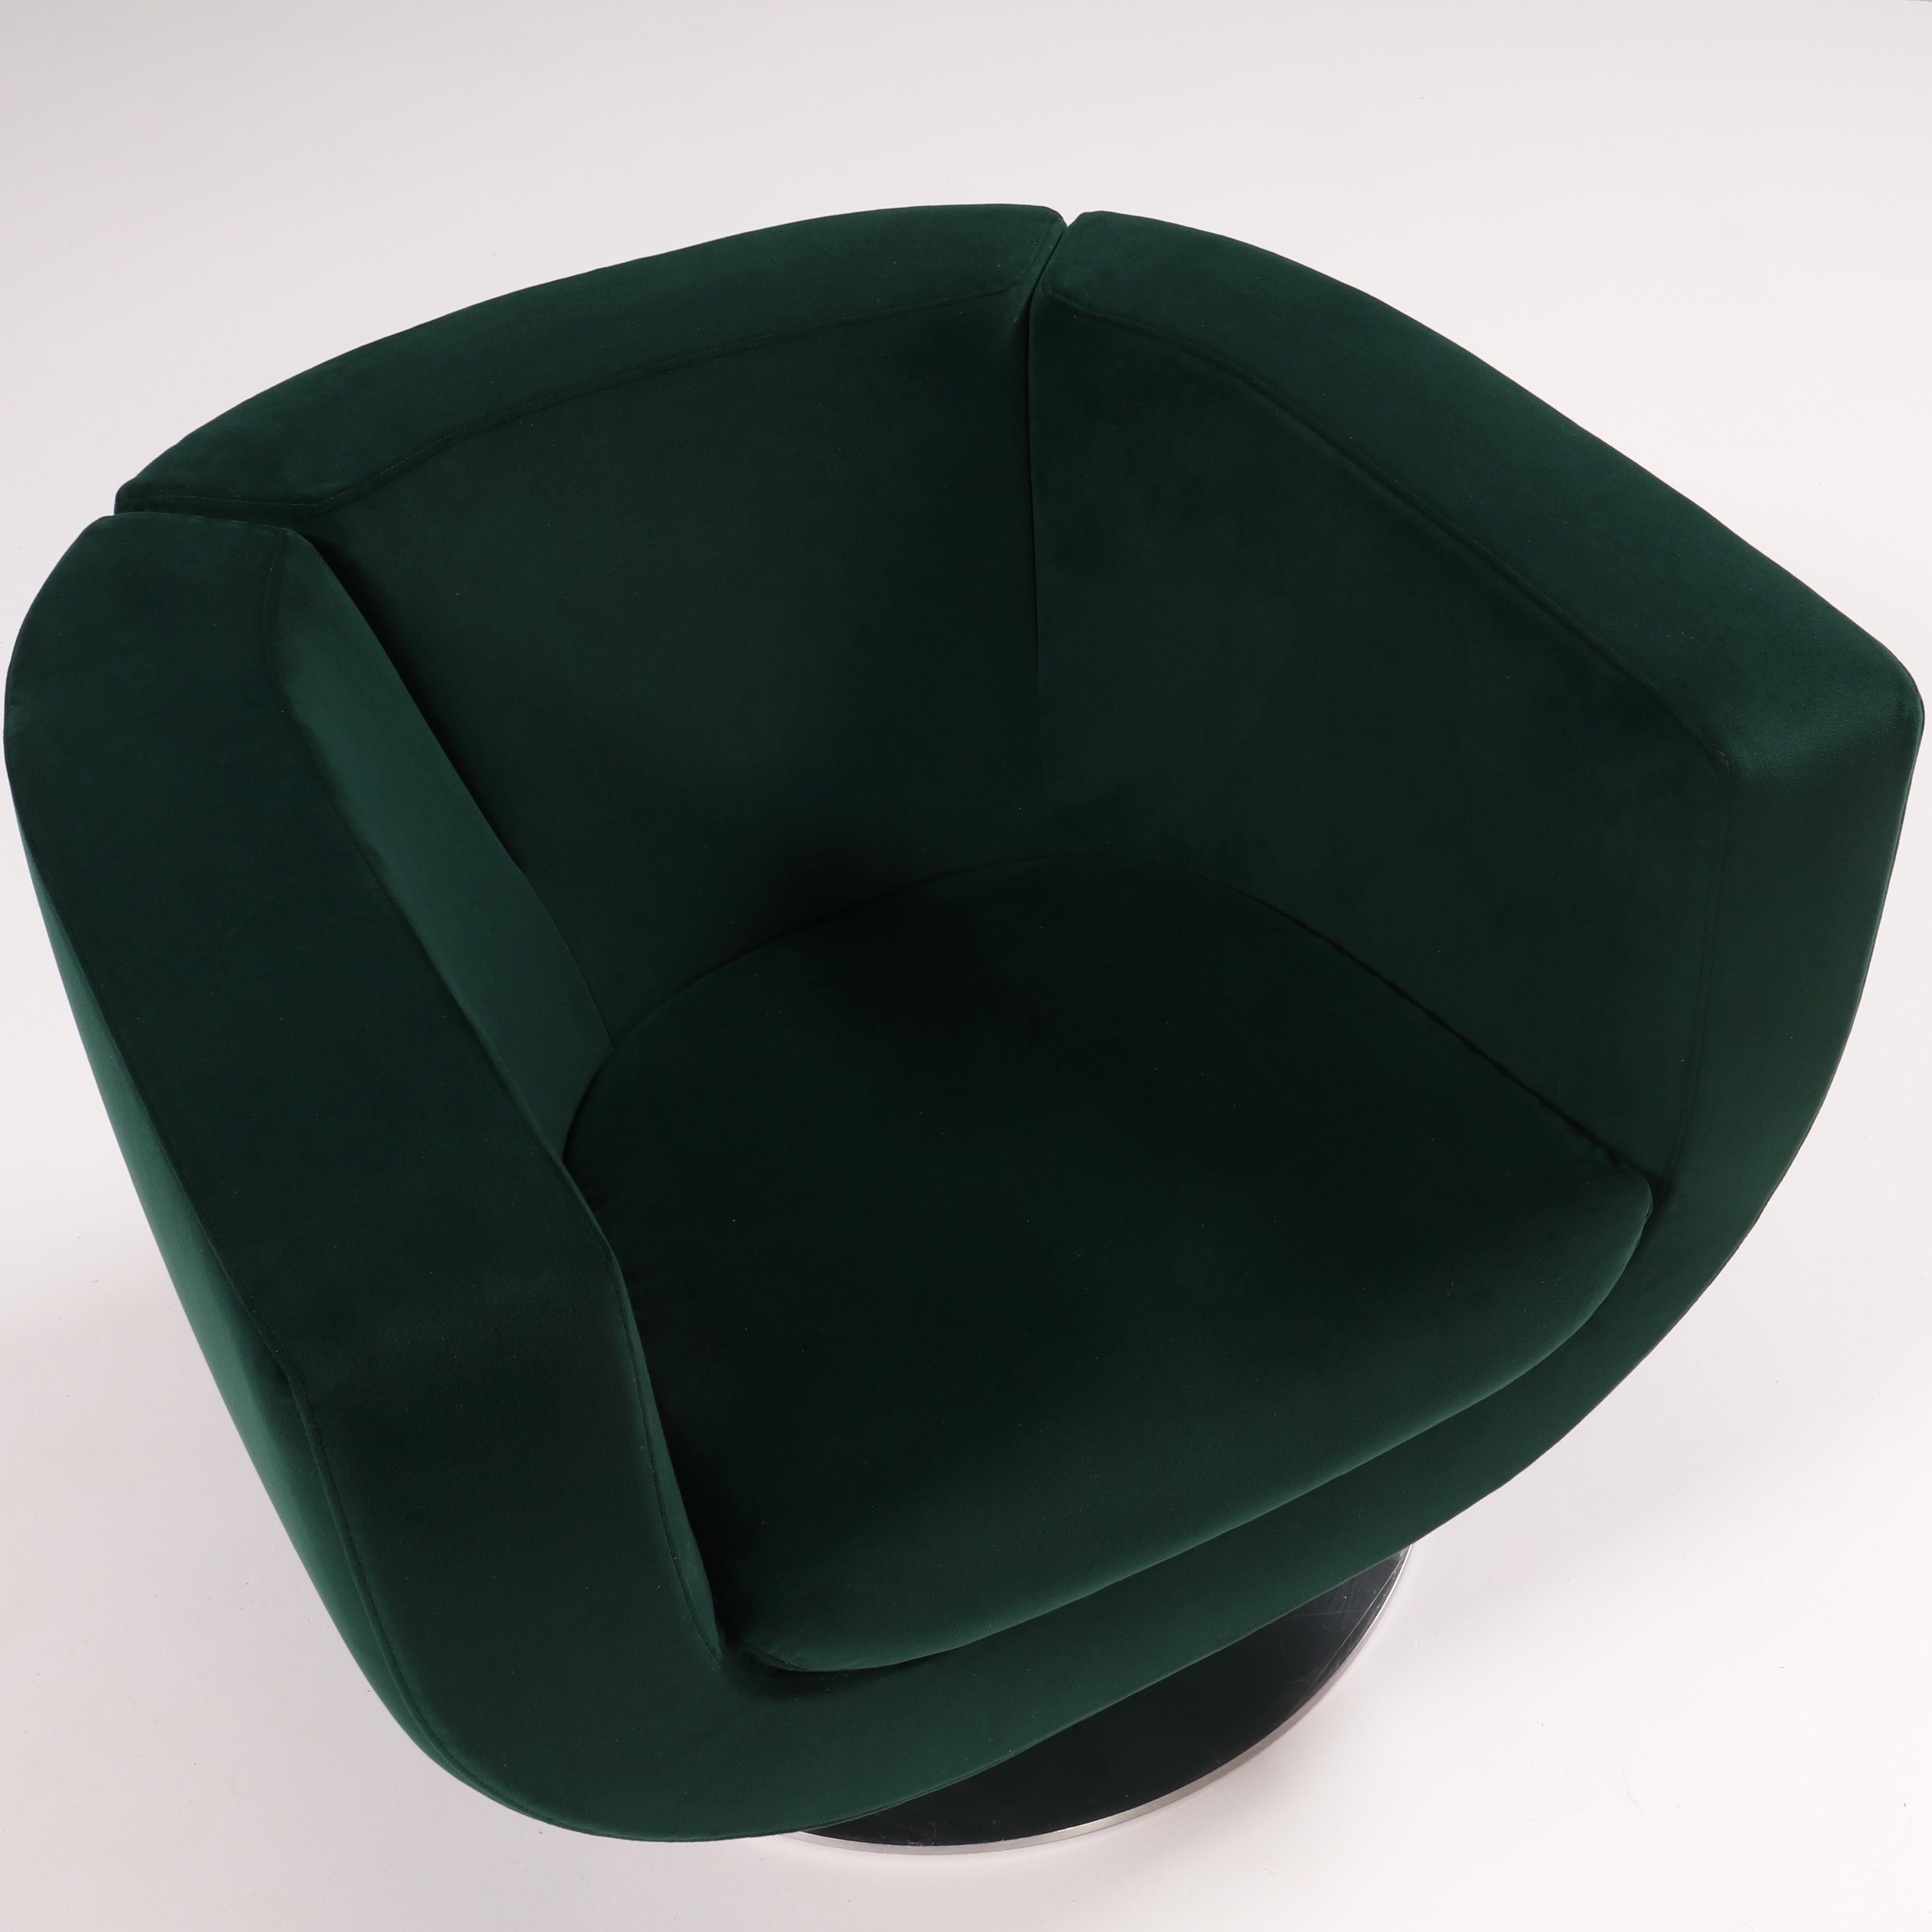 B&B Italia Green Tulip Armchair by Jeffrey Bernett In Good Condition For Sale In London, GB